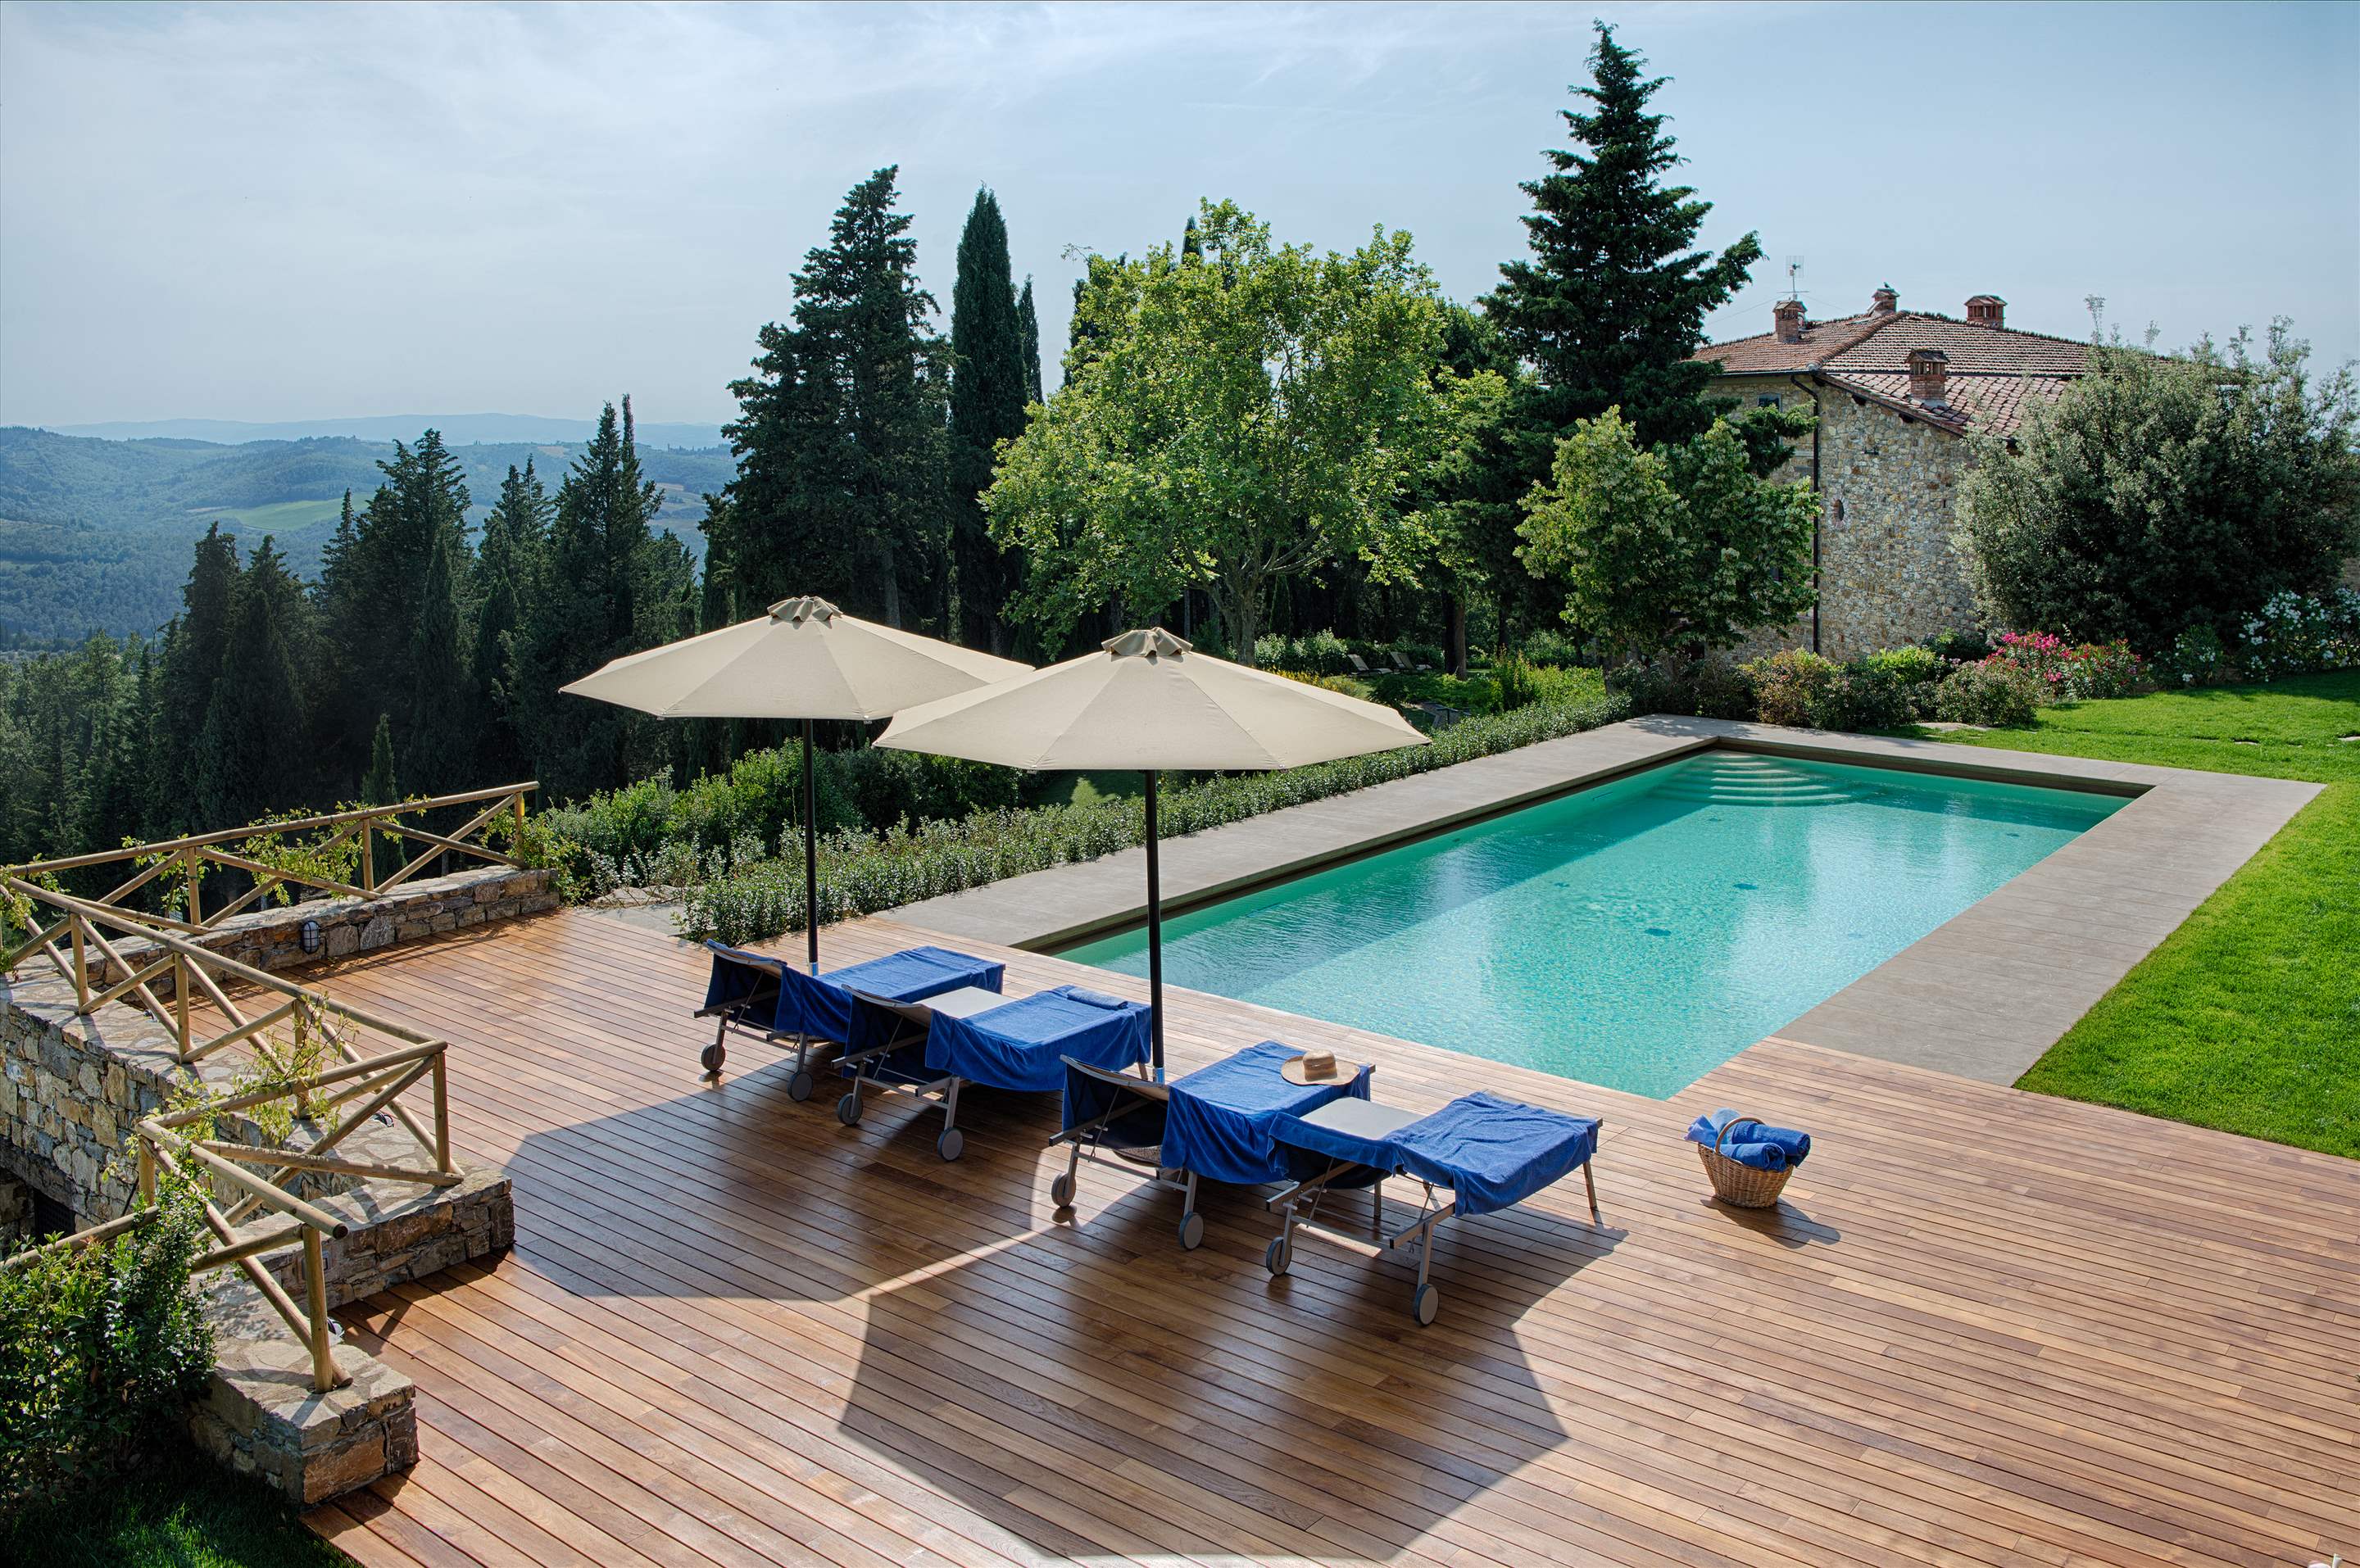 Villa La Valetta, Hotel Bedroom 2 persons - Suite A, 1 bedroom villa in Chianti & Countryside, Tuscany Photo #1